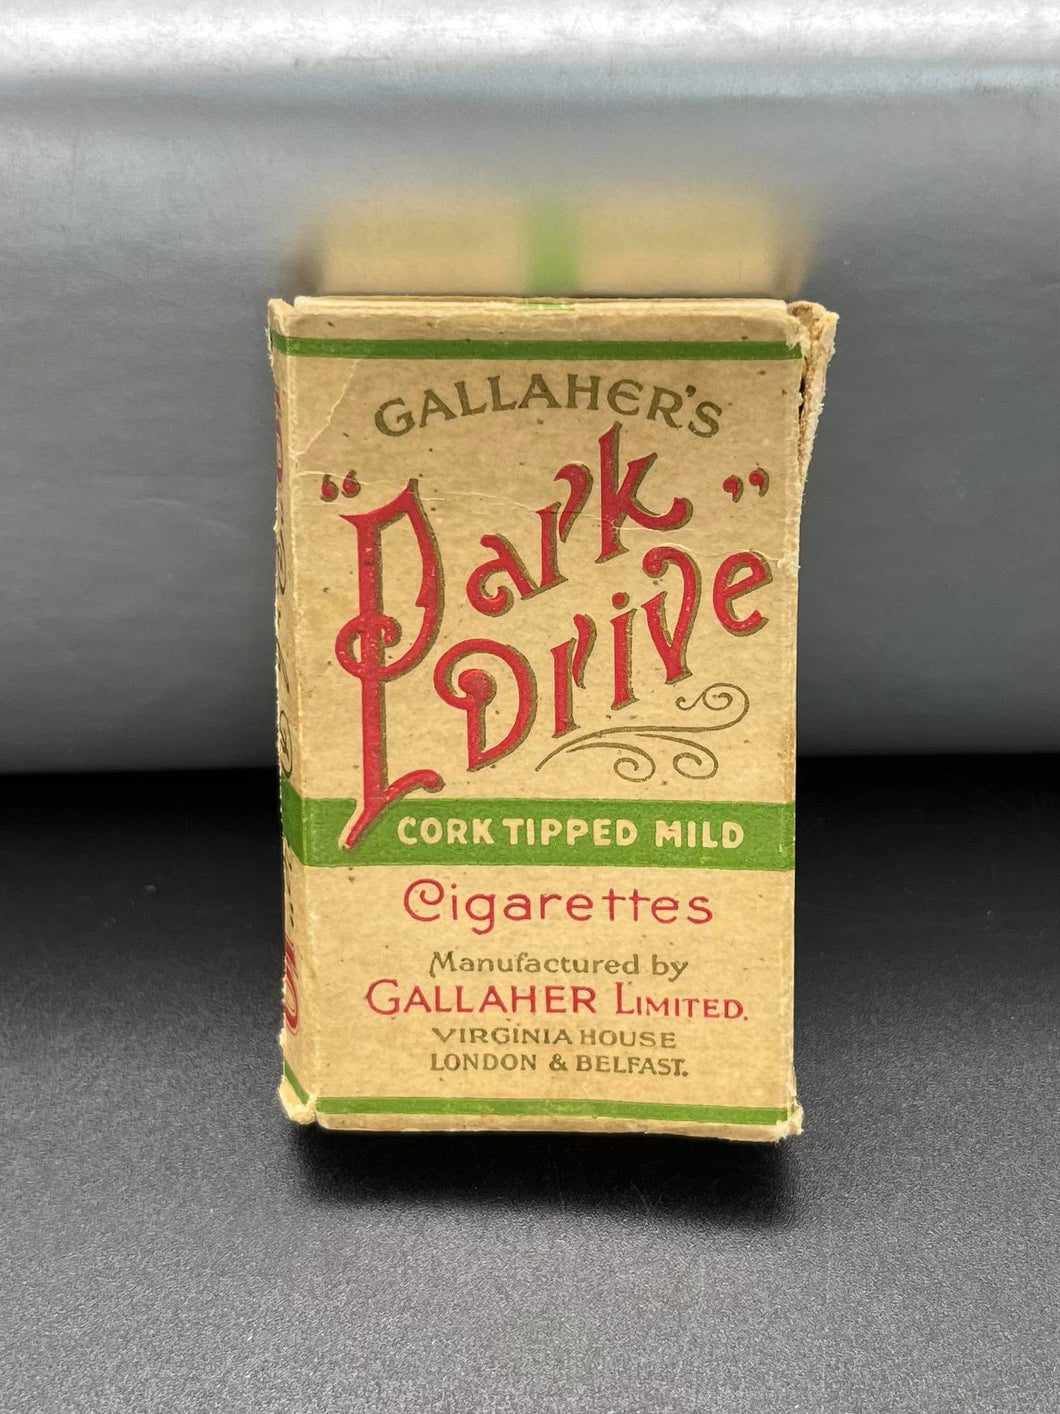 Gallaher’s “Park Drive” Mild Cigarette Packet